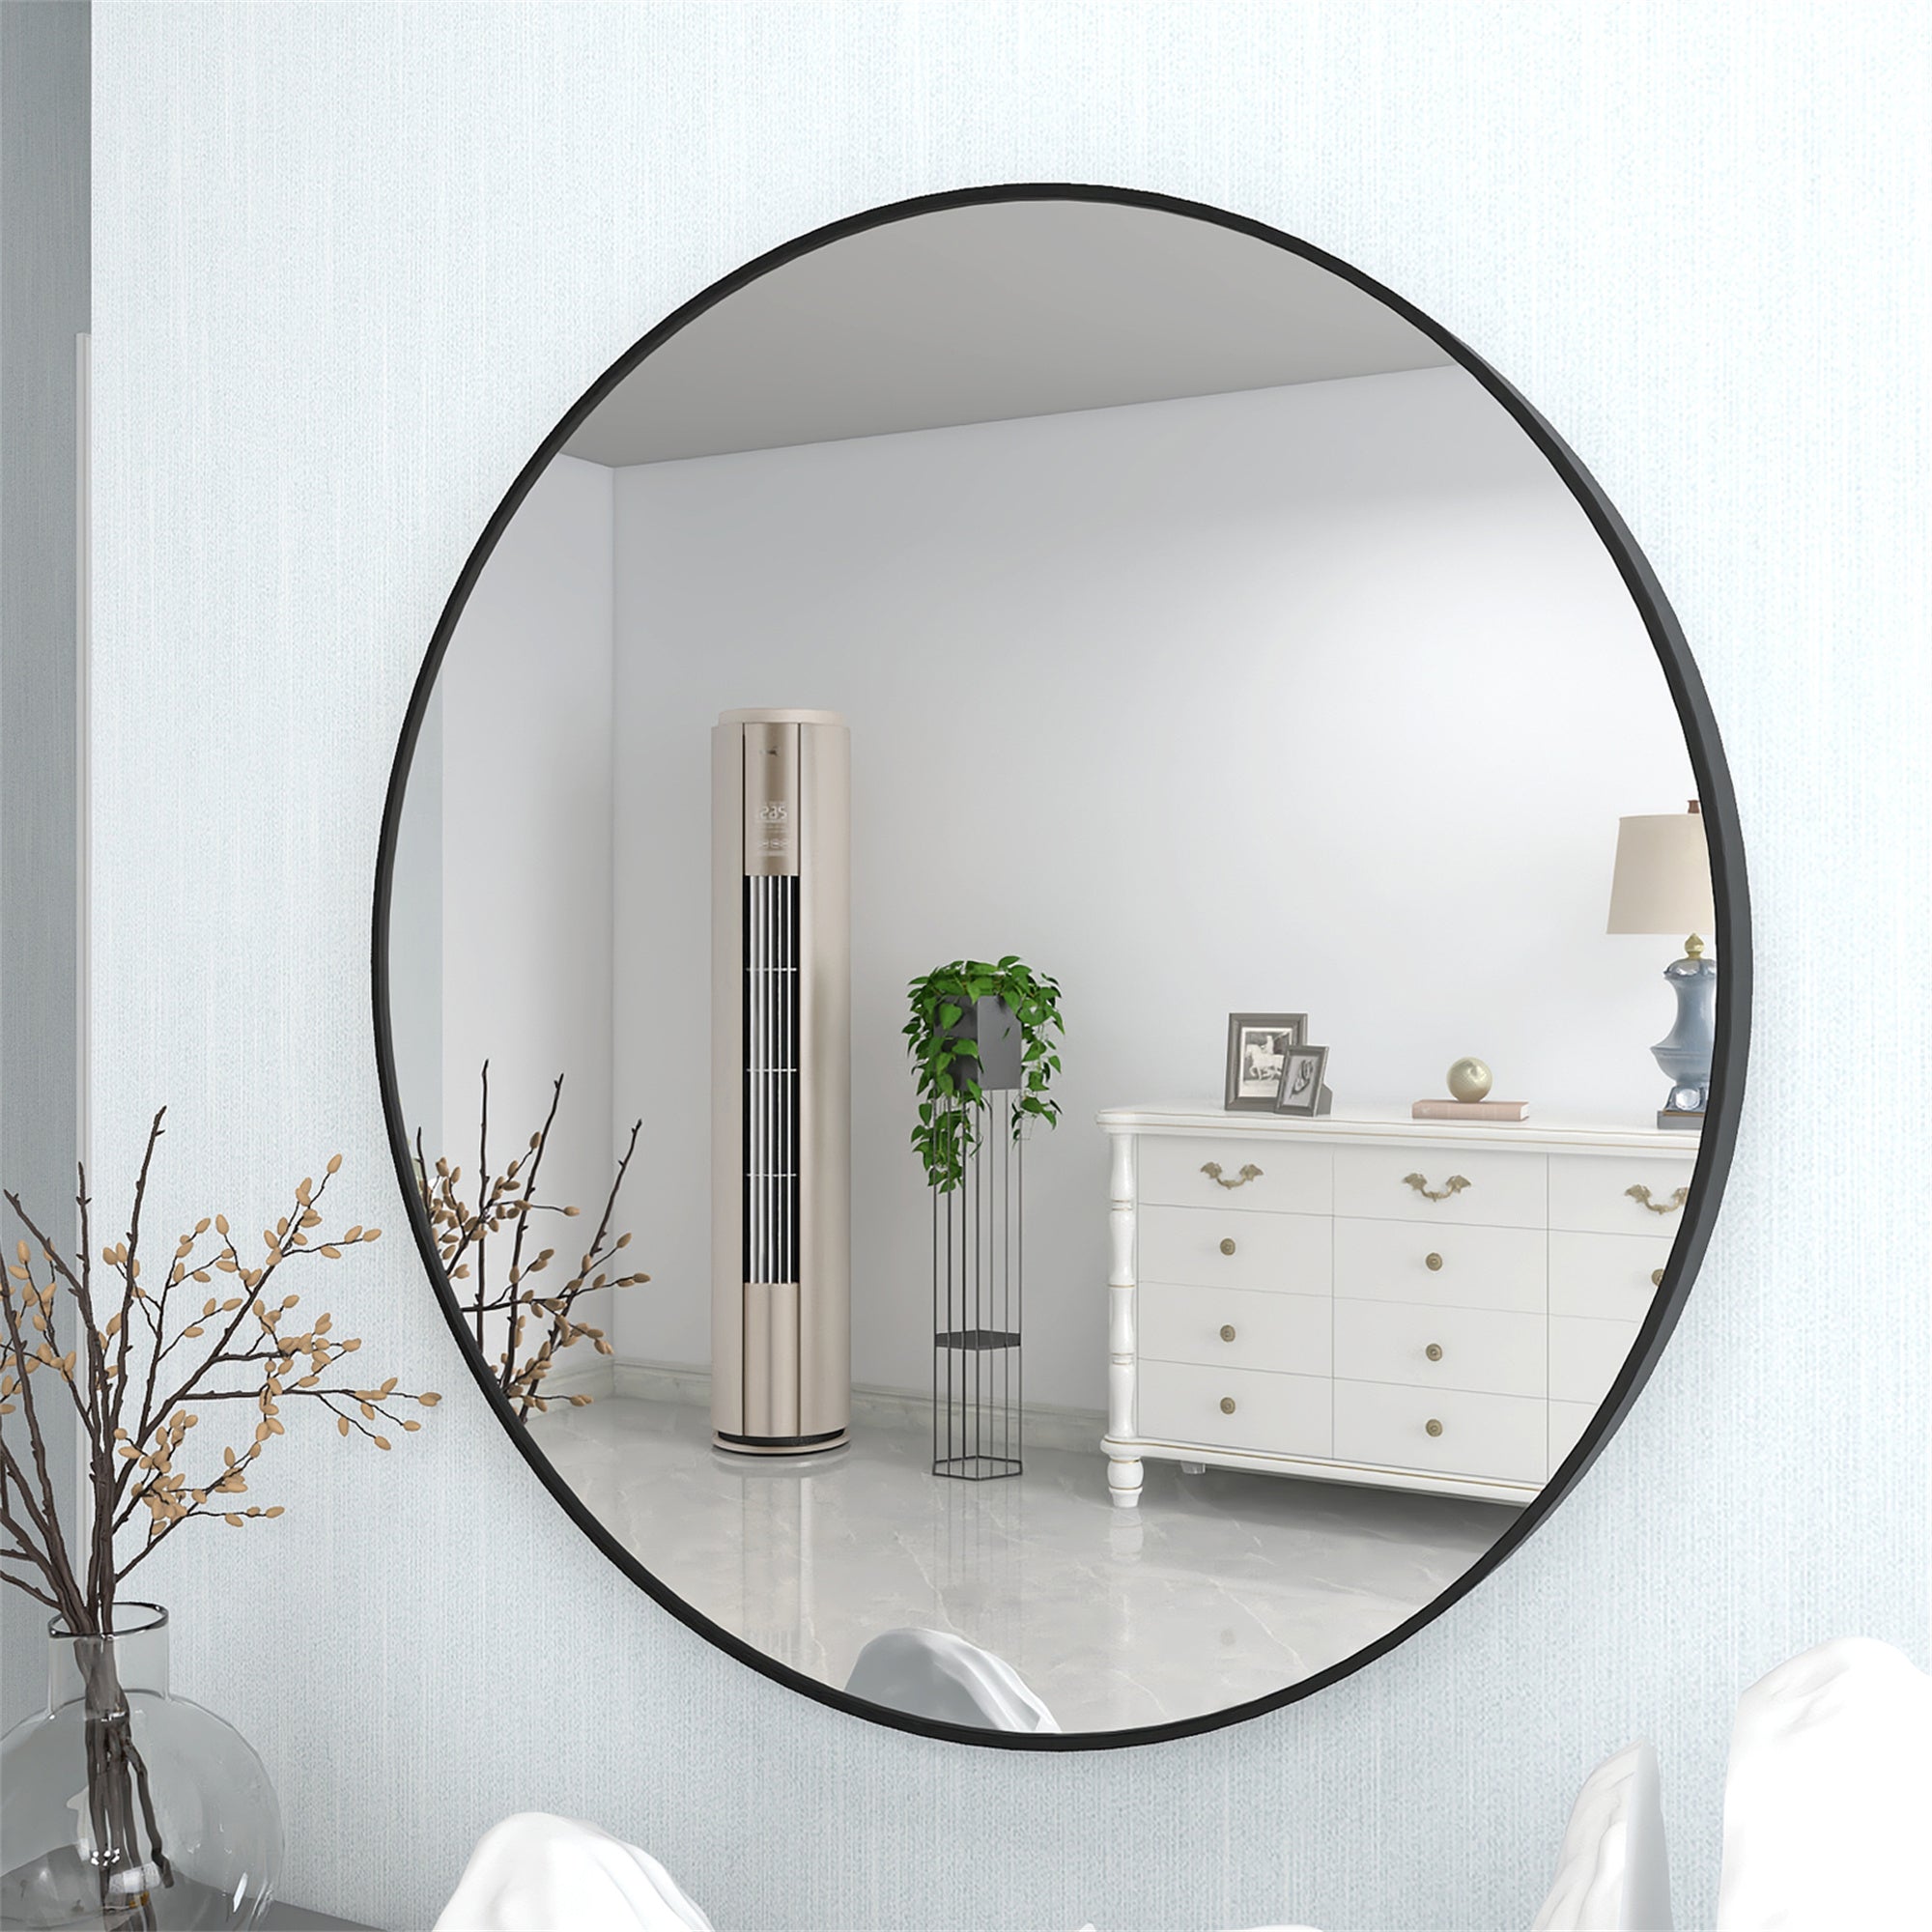 ZNTS 28" Wall Round Circle Mirror Bathroom Make Up Vanity Mirror - Black W151084134